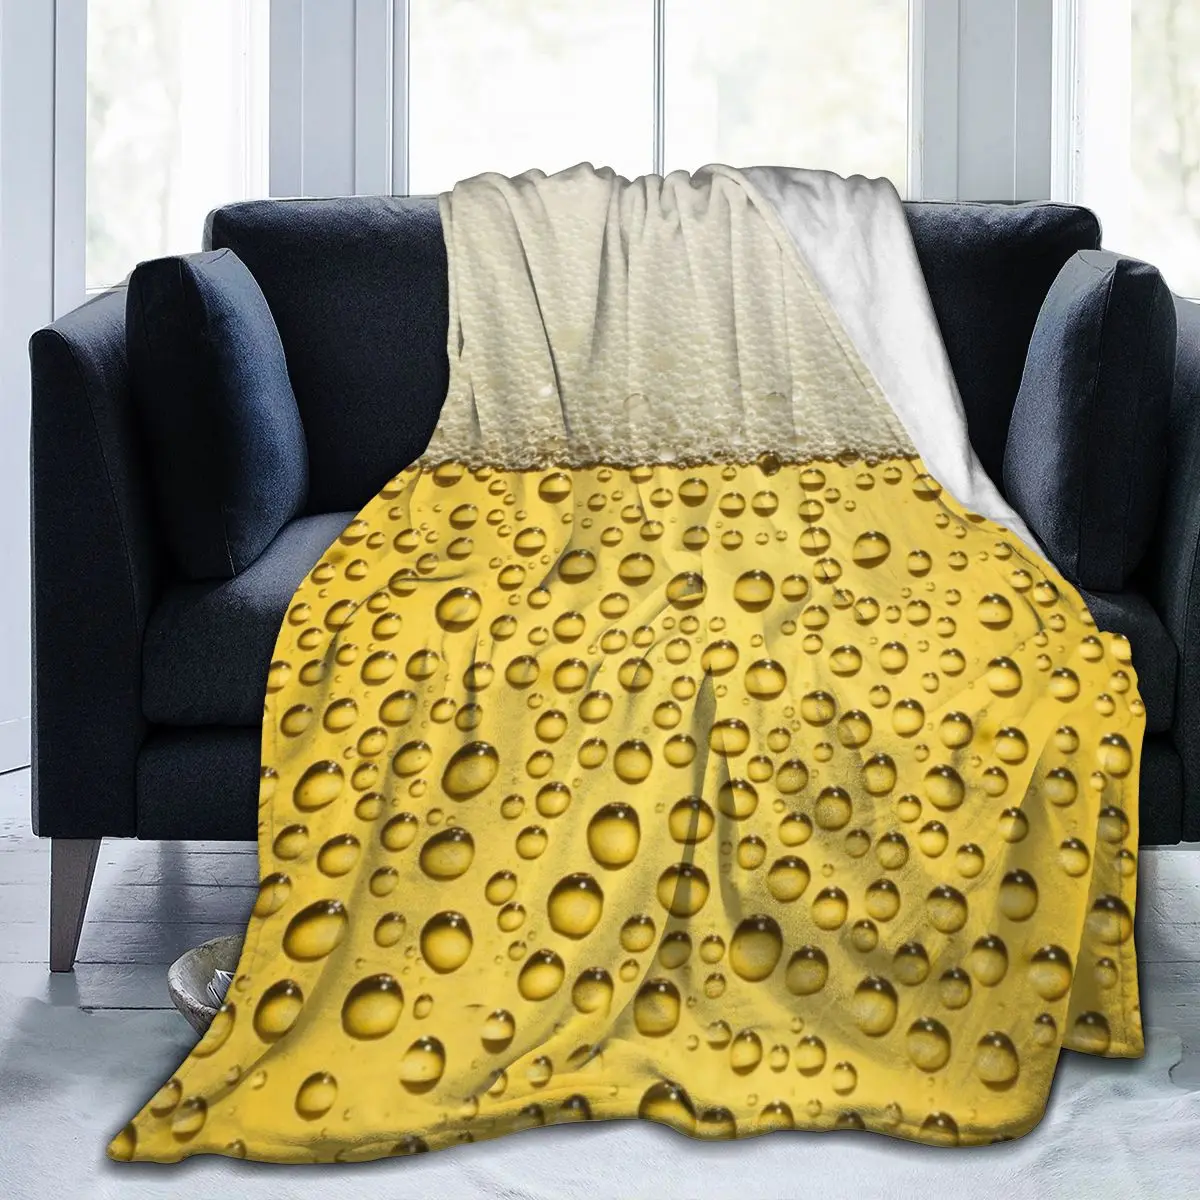 

Manta de franela estampada с персональным в 3D, Сабана, ropa de cama, funda suave, decorar textil para el доме, Новинка